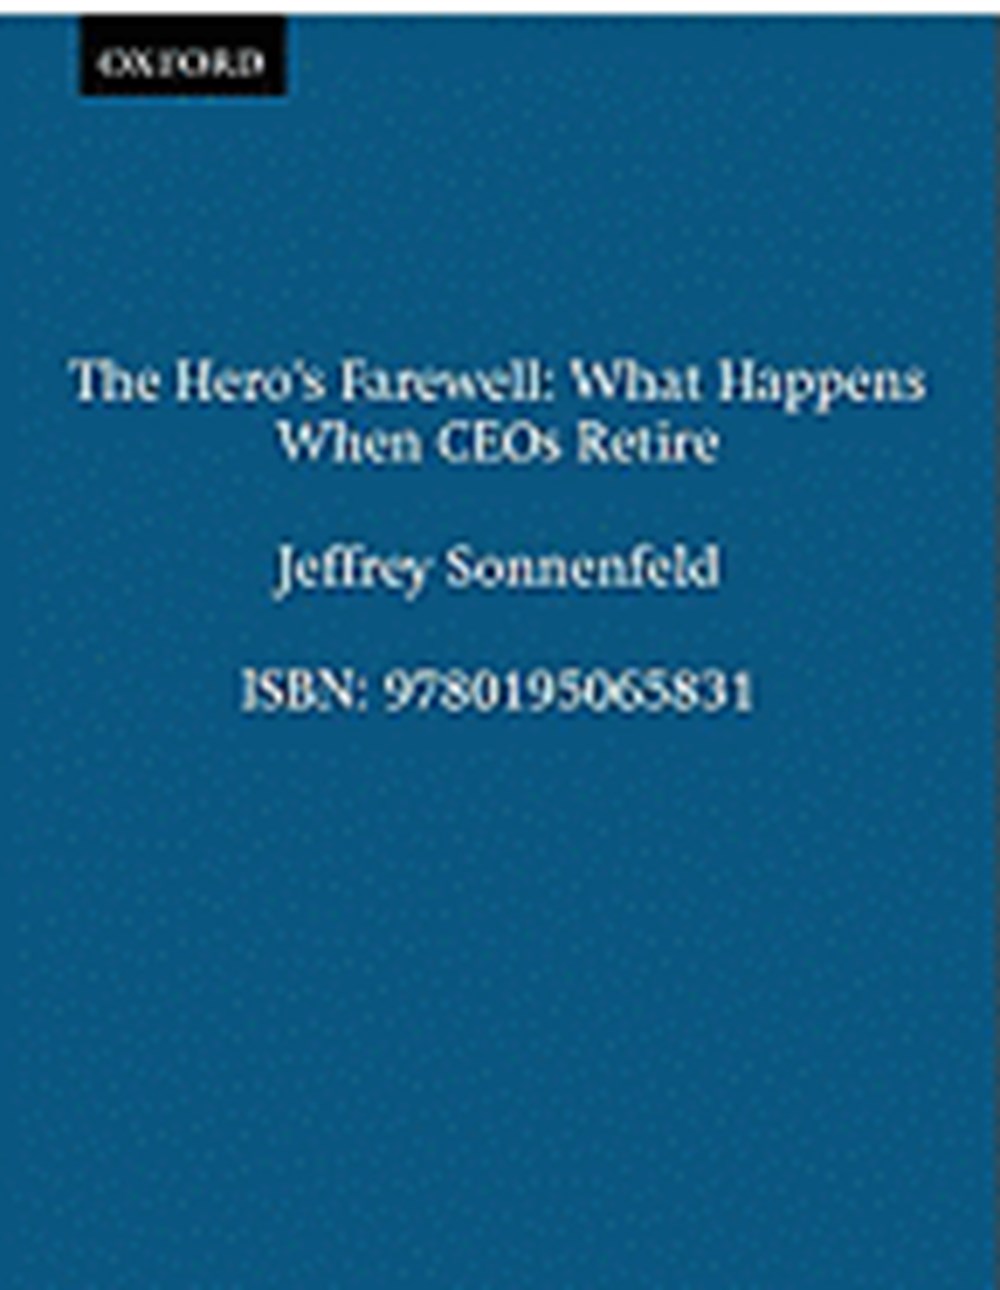 Hero's Farewell: What Happens When CEO's Retire